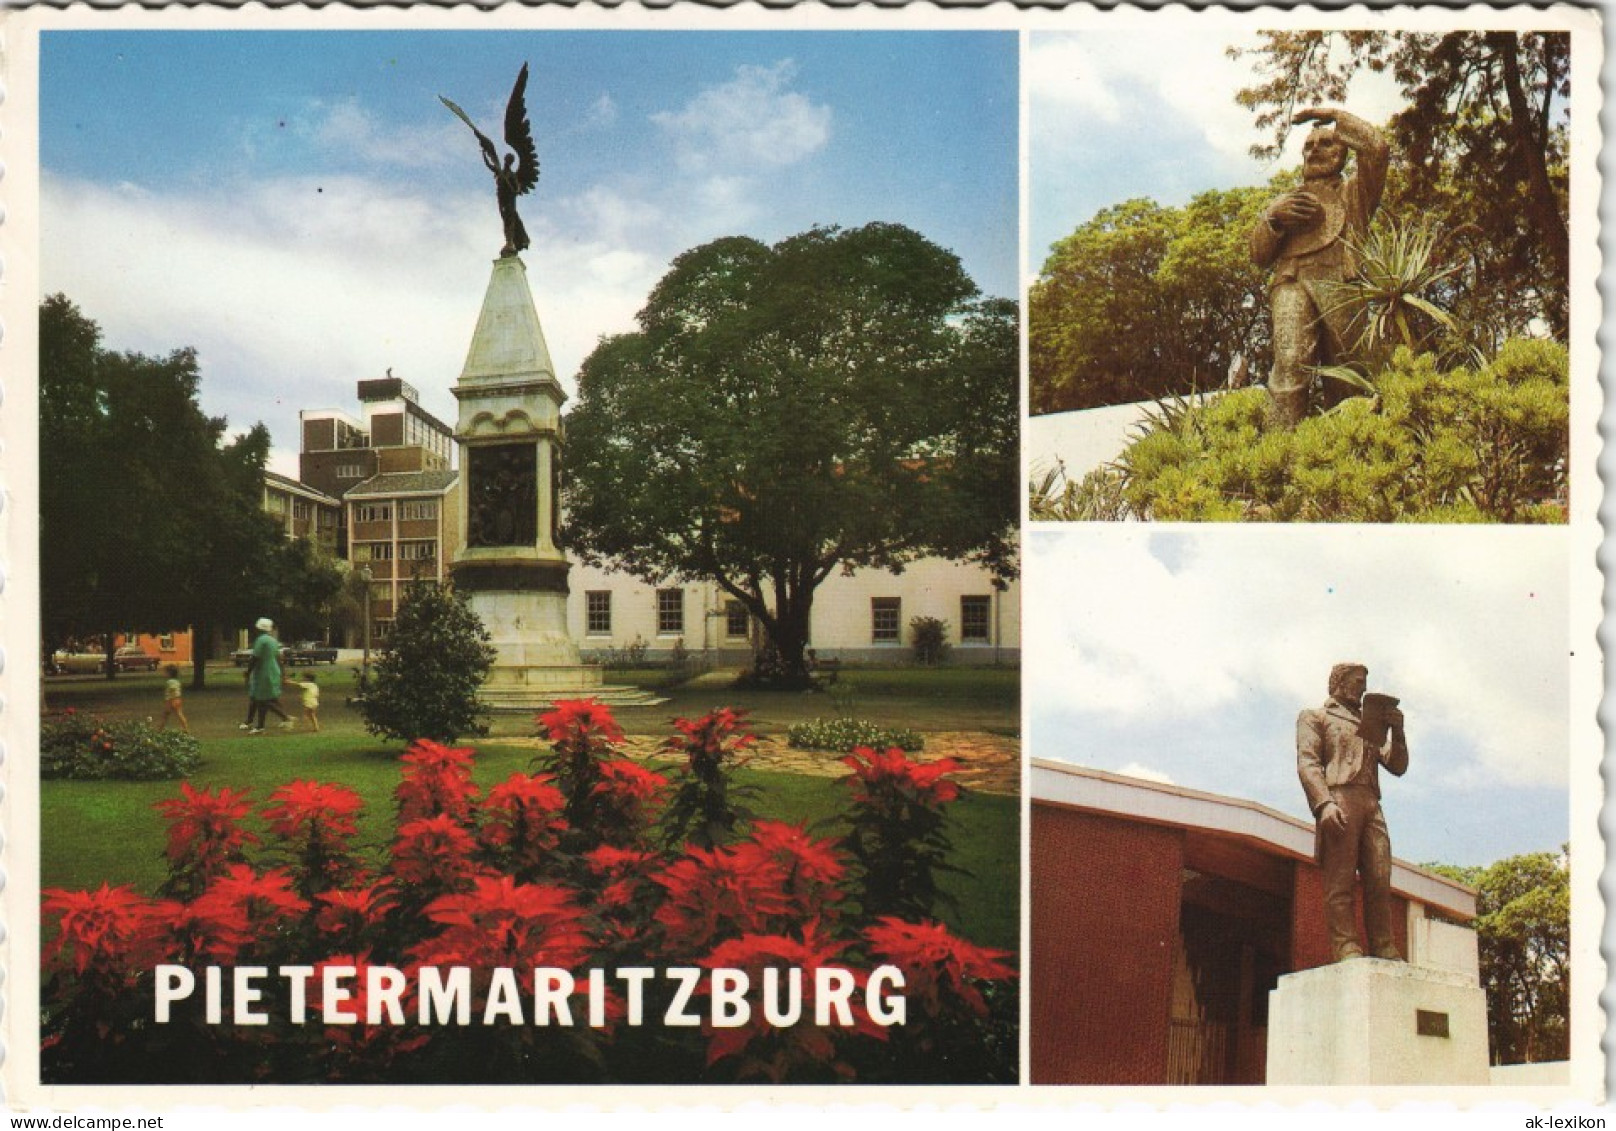 Pietermaritzburg MB: Boer War Monument, Piet Retief Statue  Maritz Statue 1975 - Südafrika